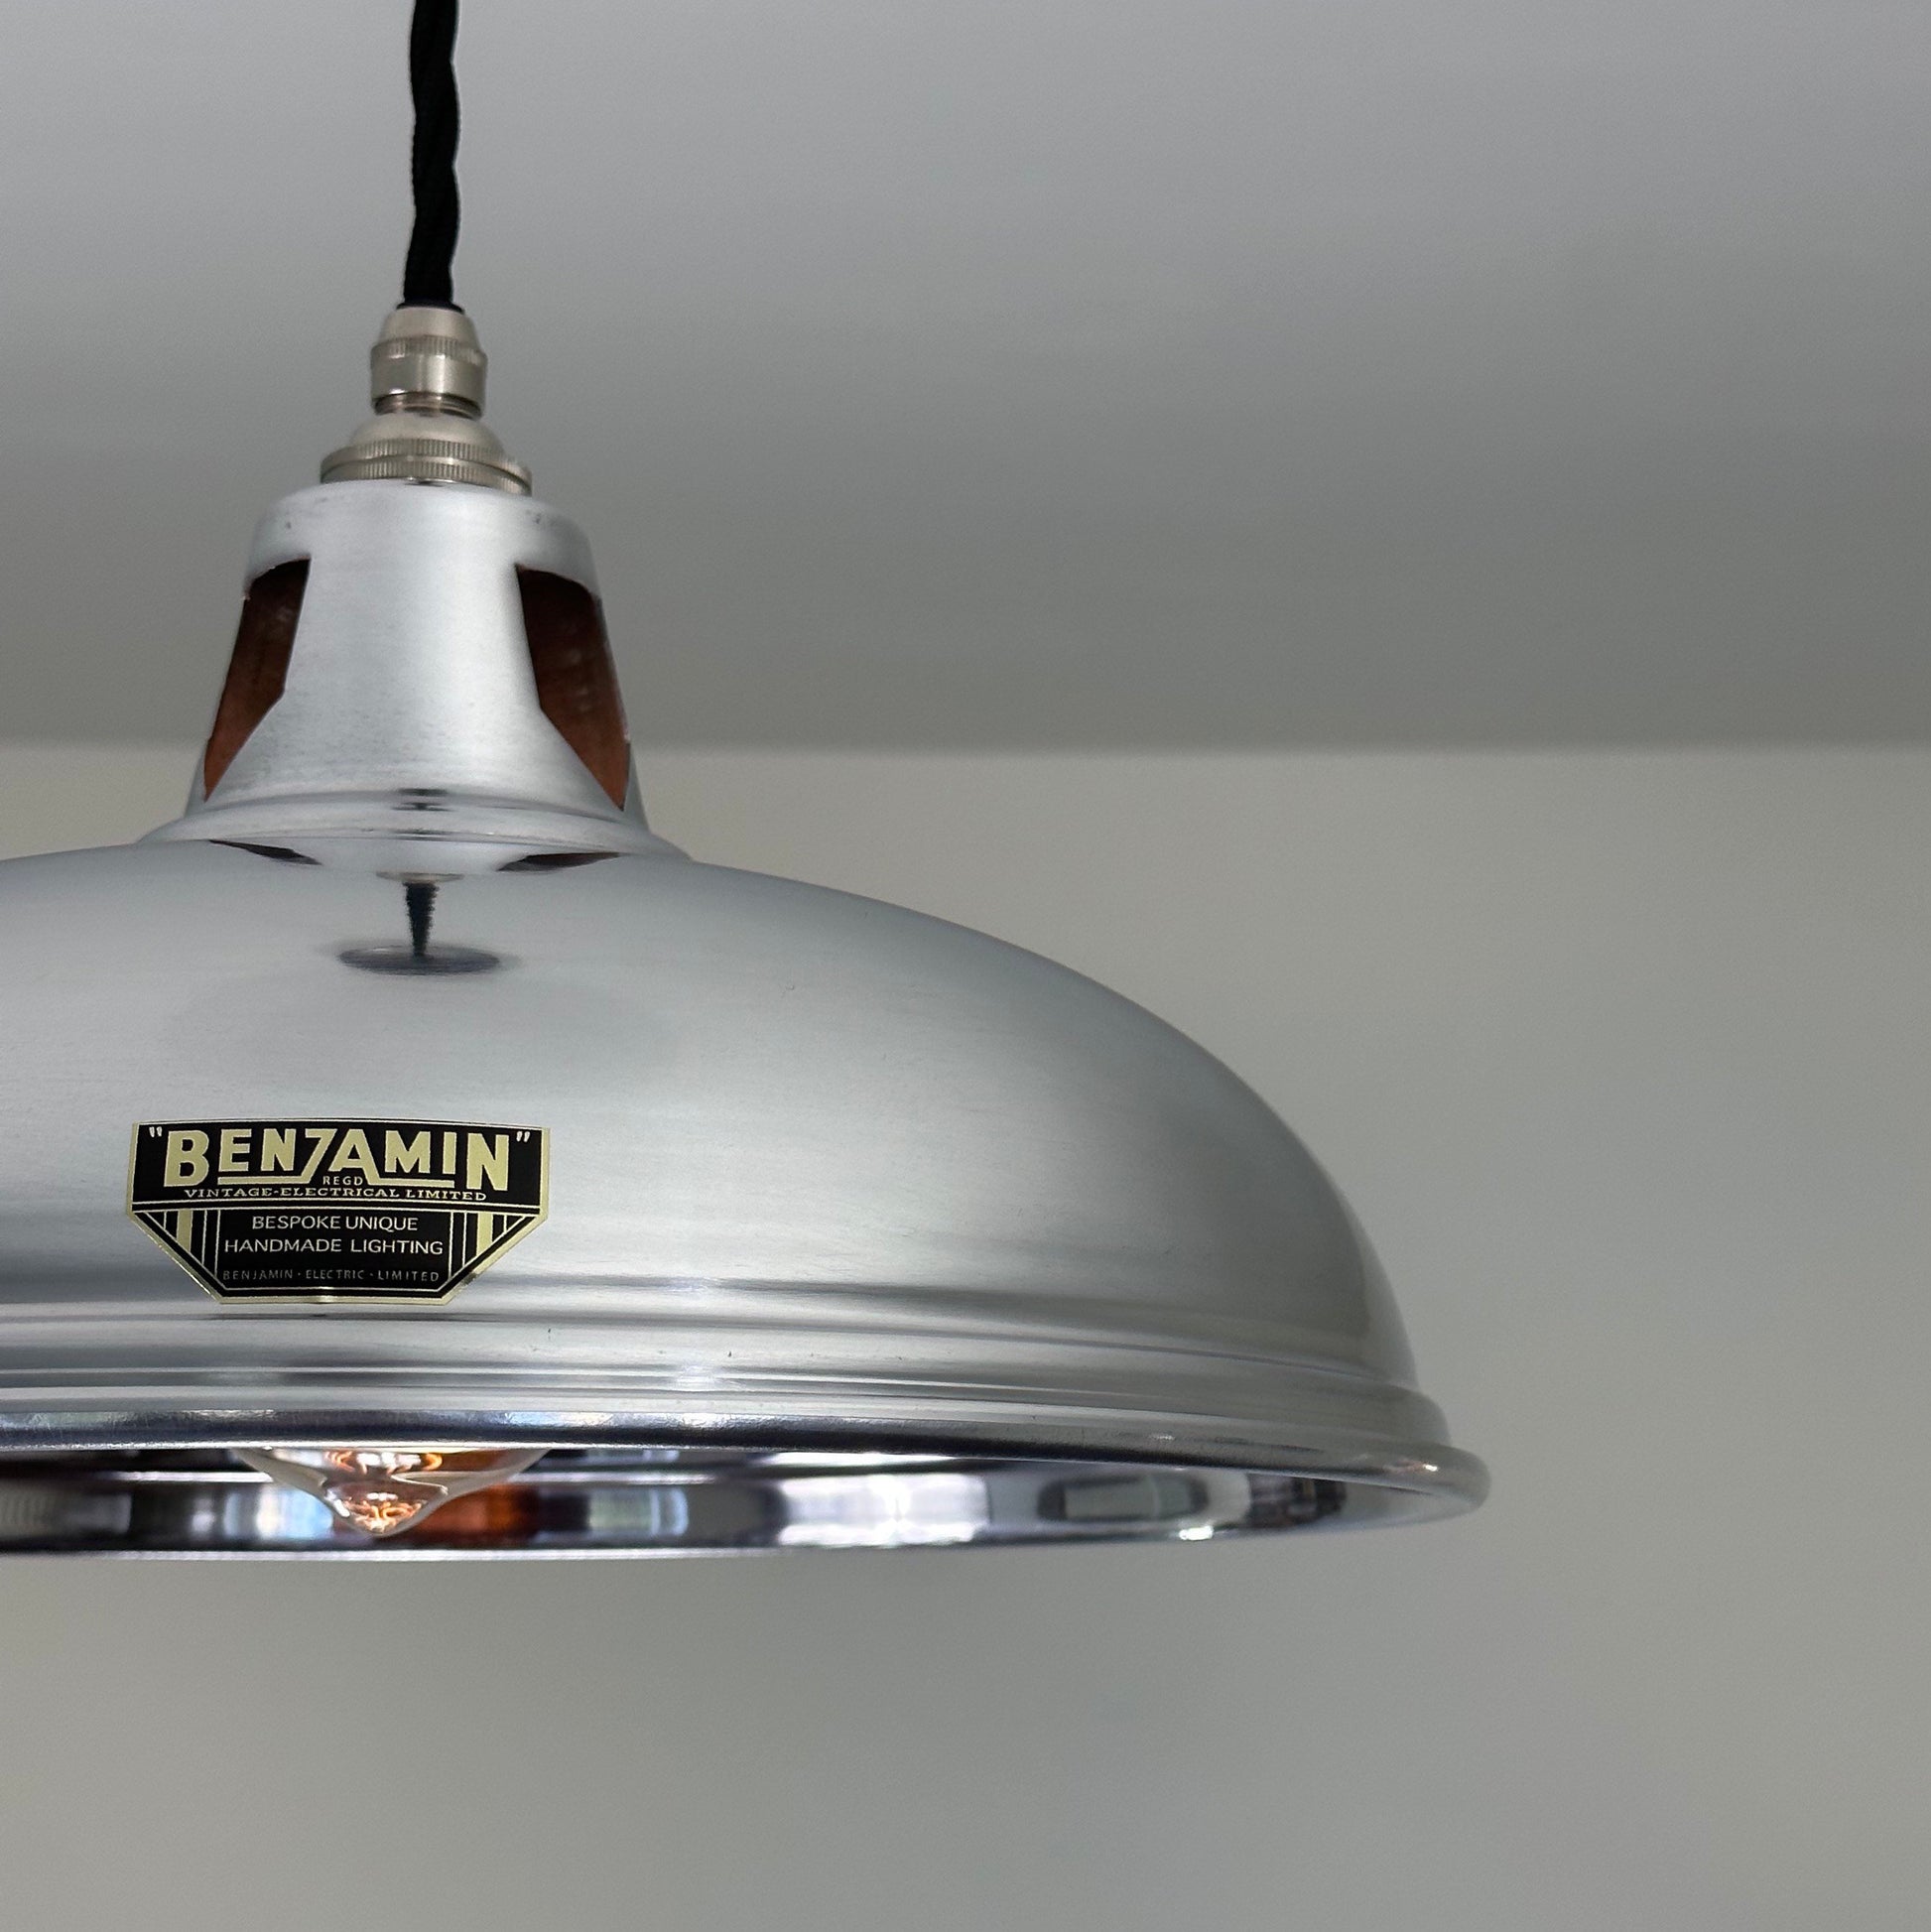 Sedgeford Coolie ~ Polished Nickel Industrial Shade Pendant Set Light | Ceiling Dining Room | Kitchen Table | Vintage Filament Bulb 12 Inch